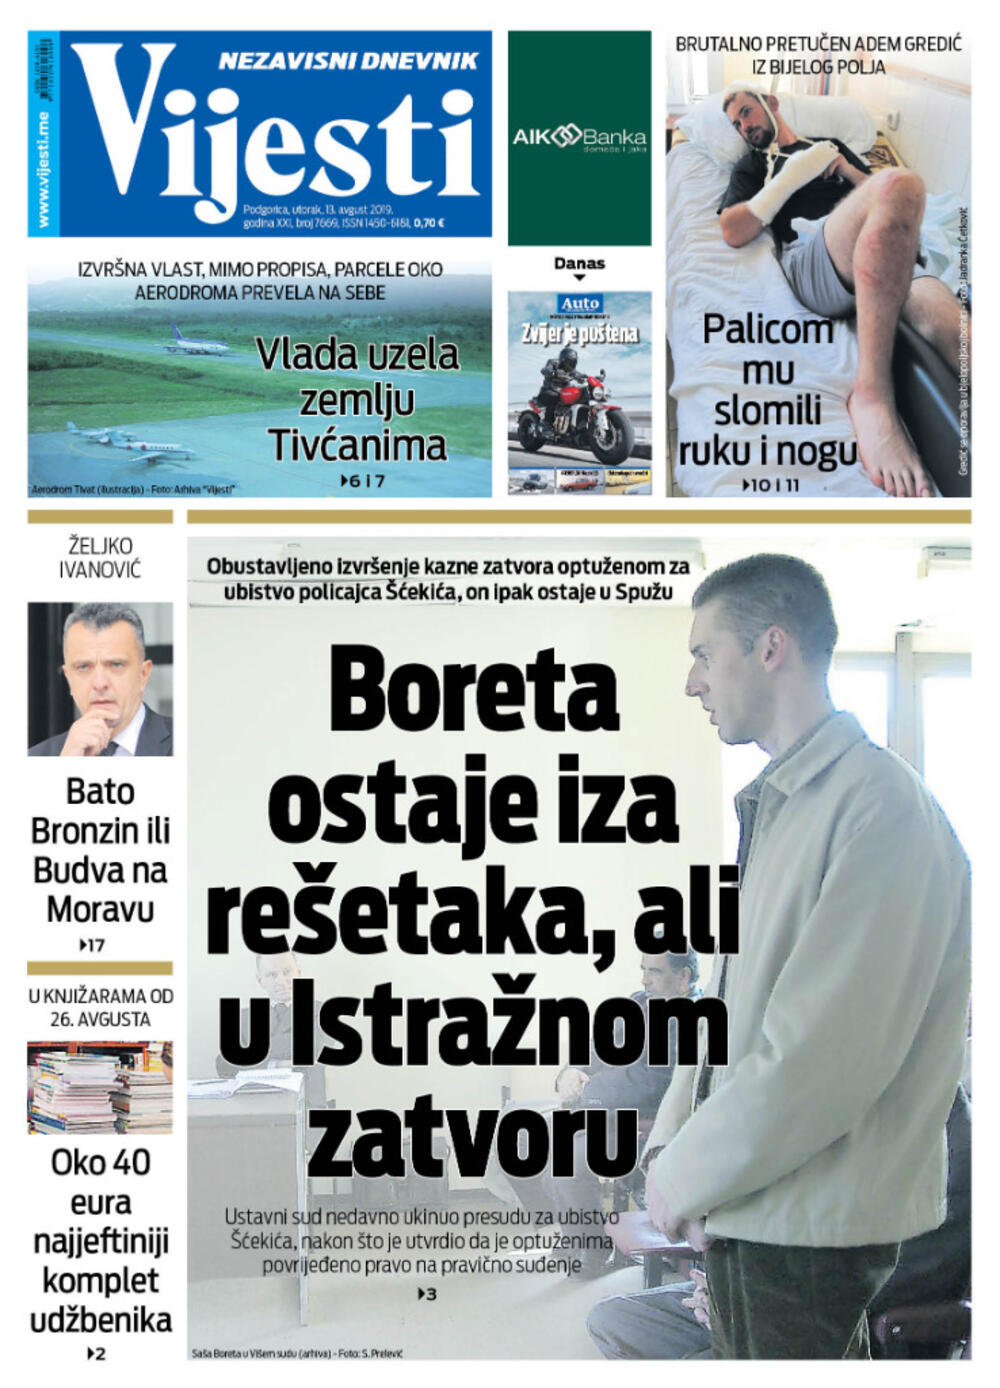 Naslovna strana "Vijesti" za 13. avgust